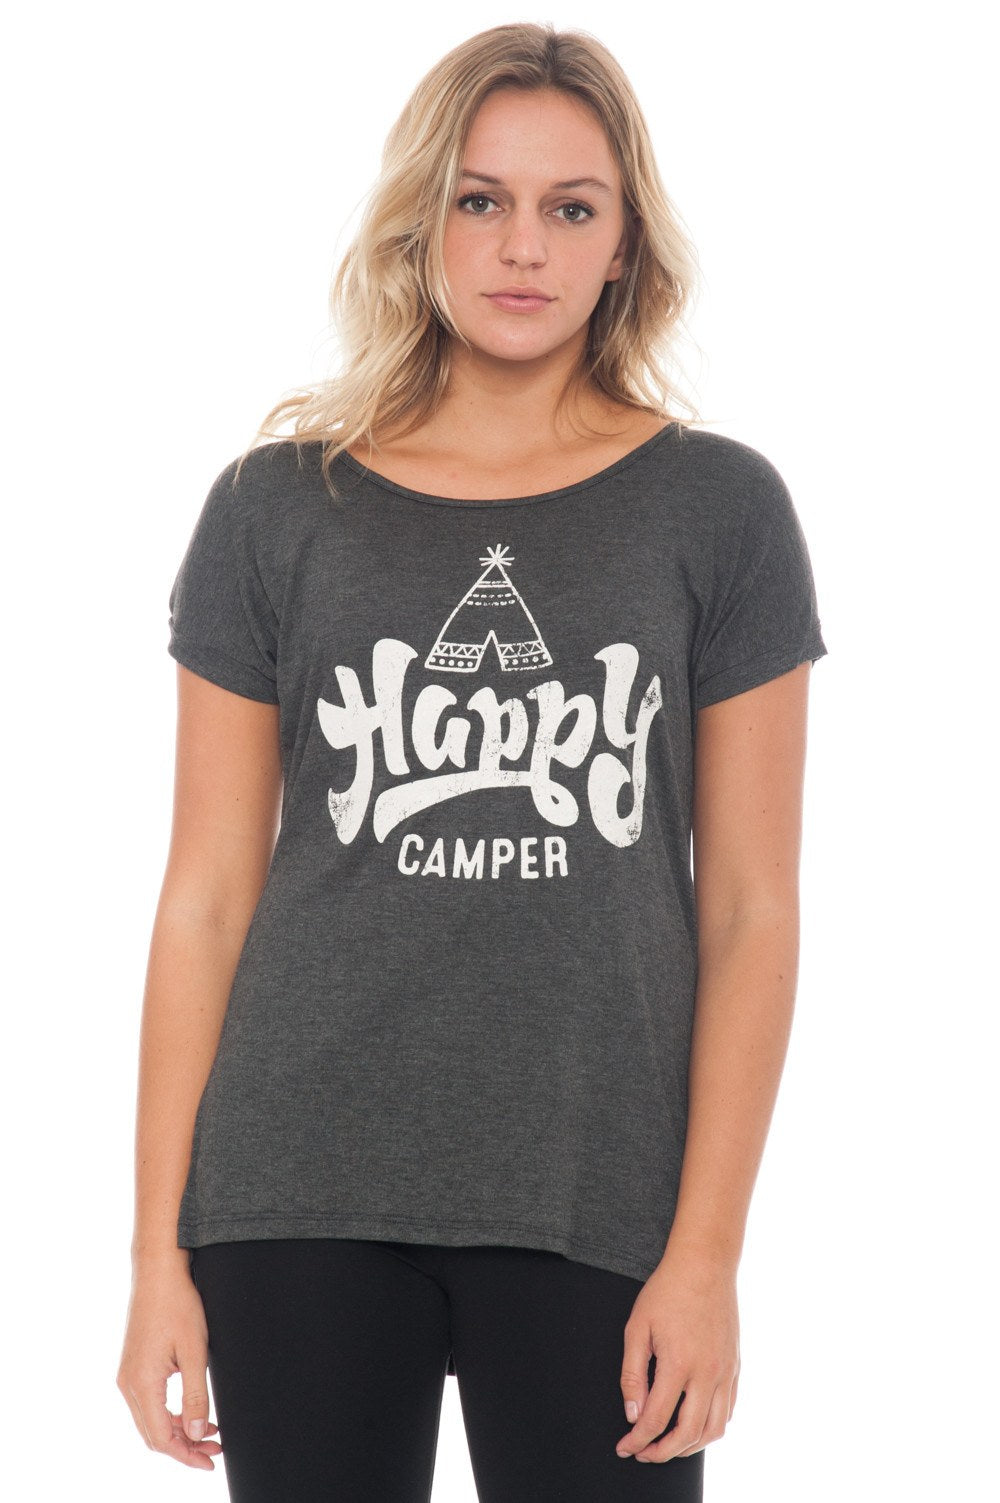 Tee - Happy Camper 2 - 1